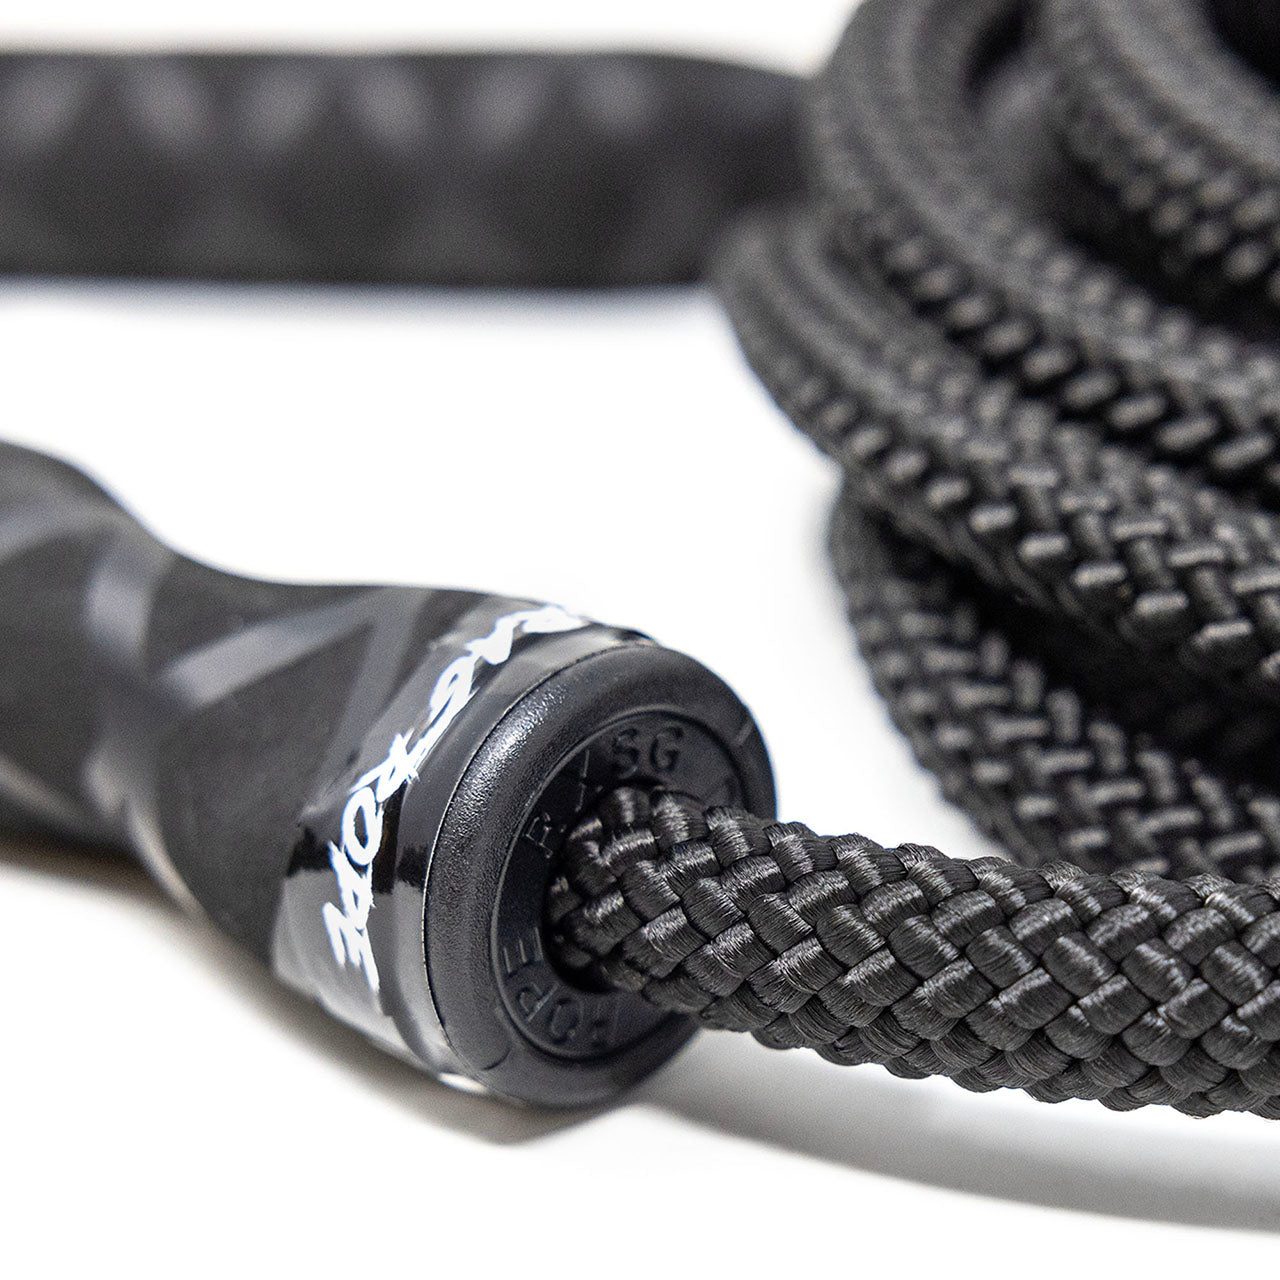 RXSG Drag Rope Black Handle Upclose